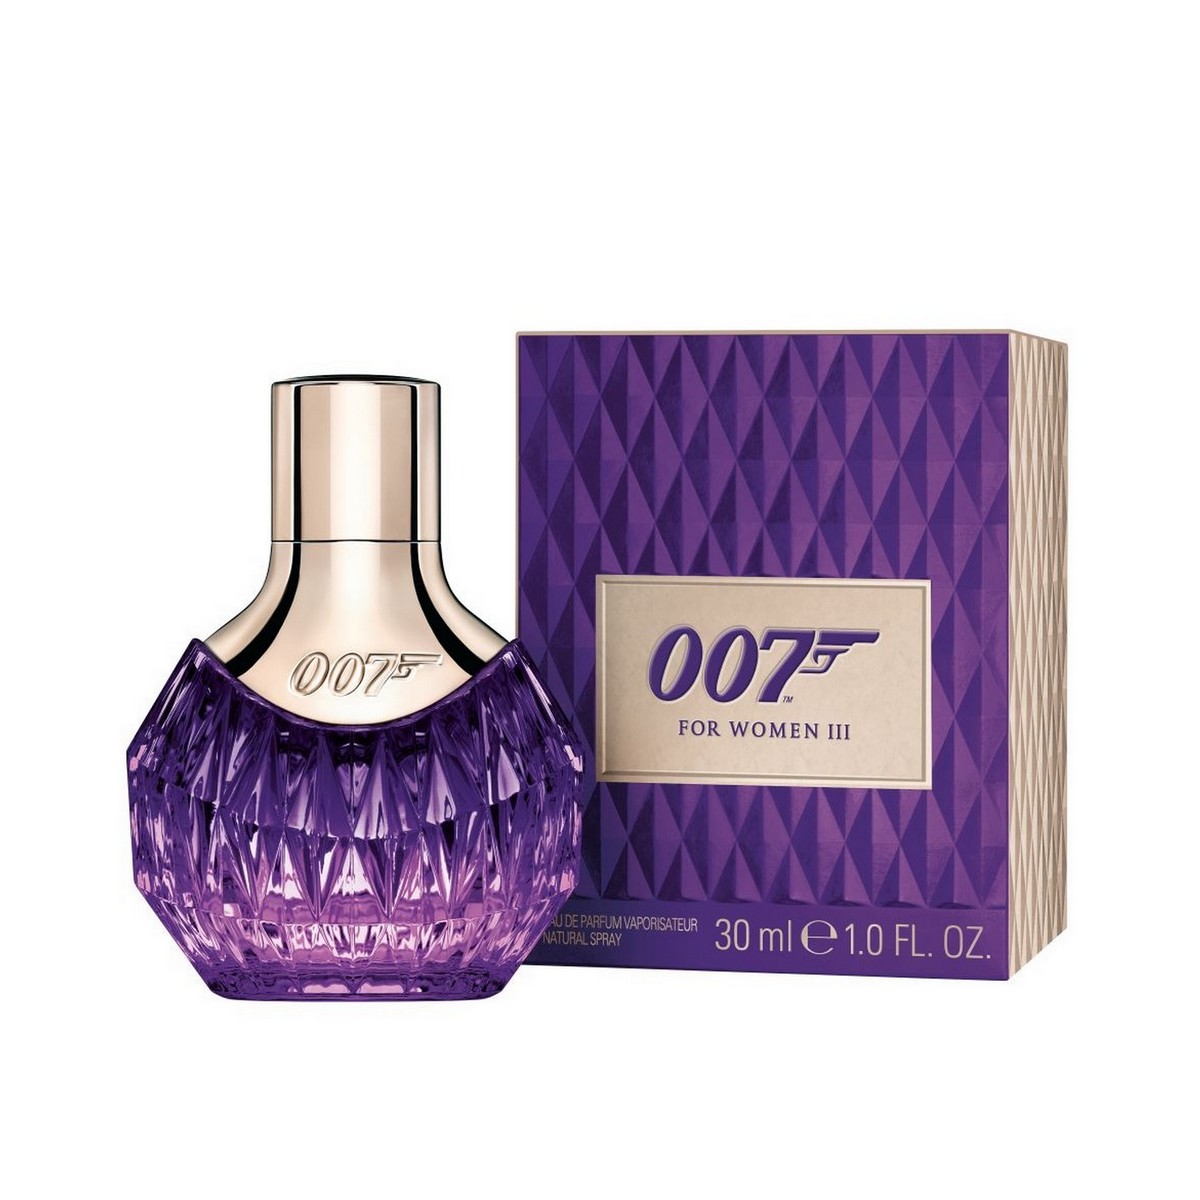 James Bond 007 for Women III Eau de Parfum 30ml